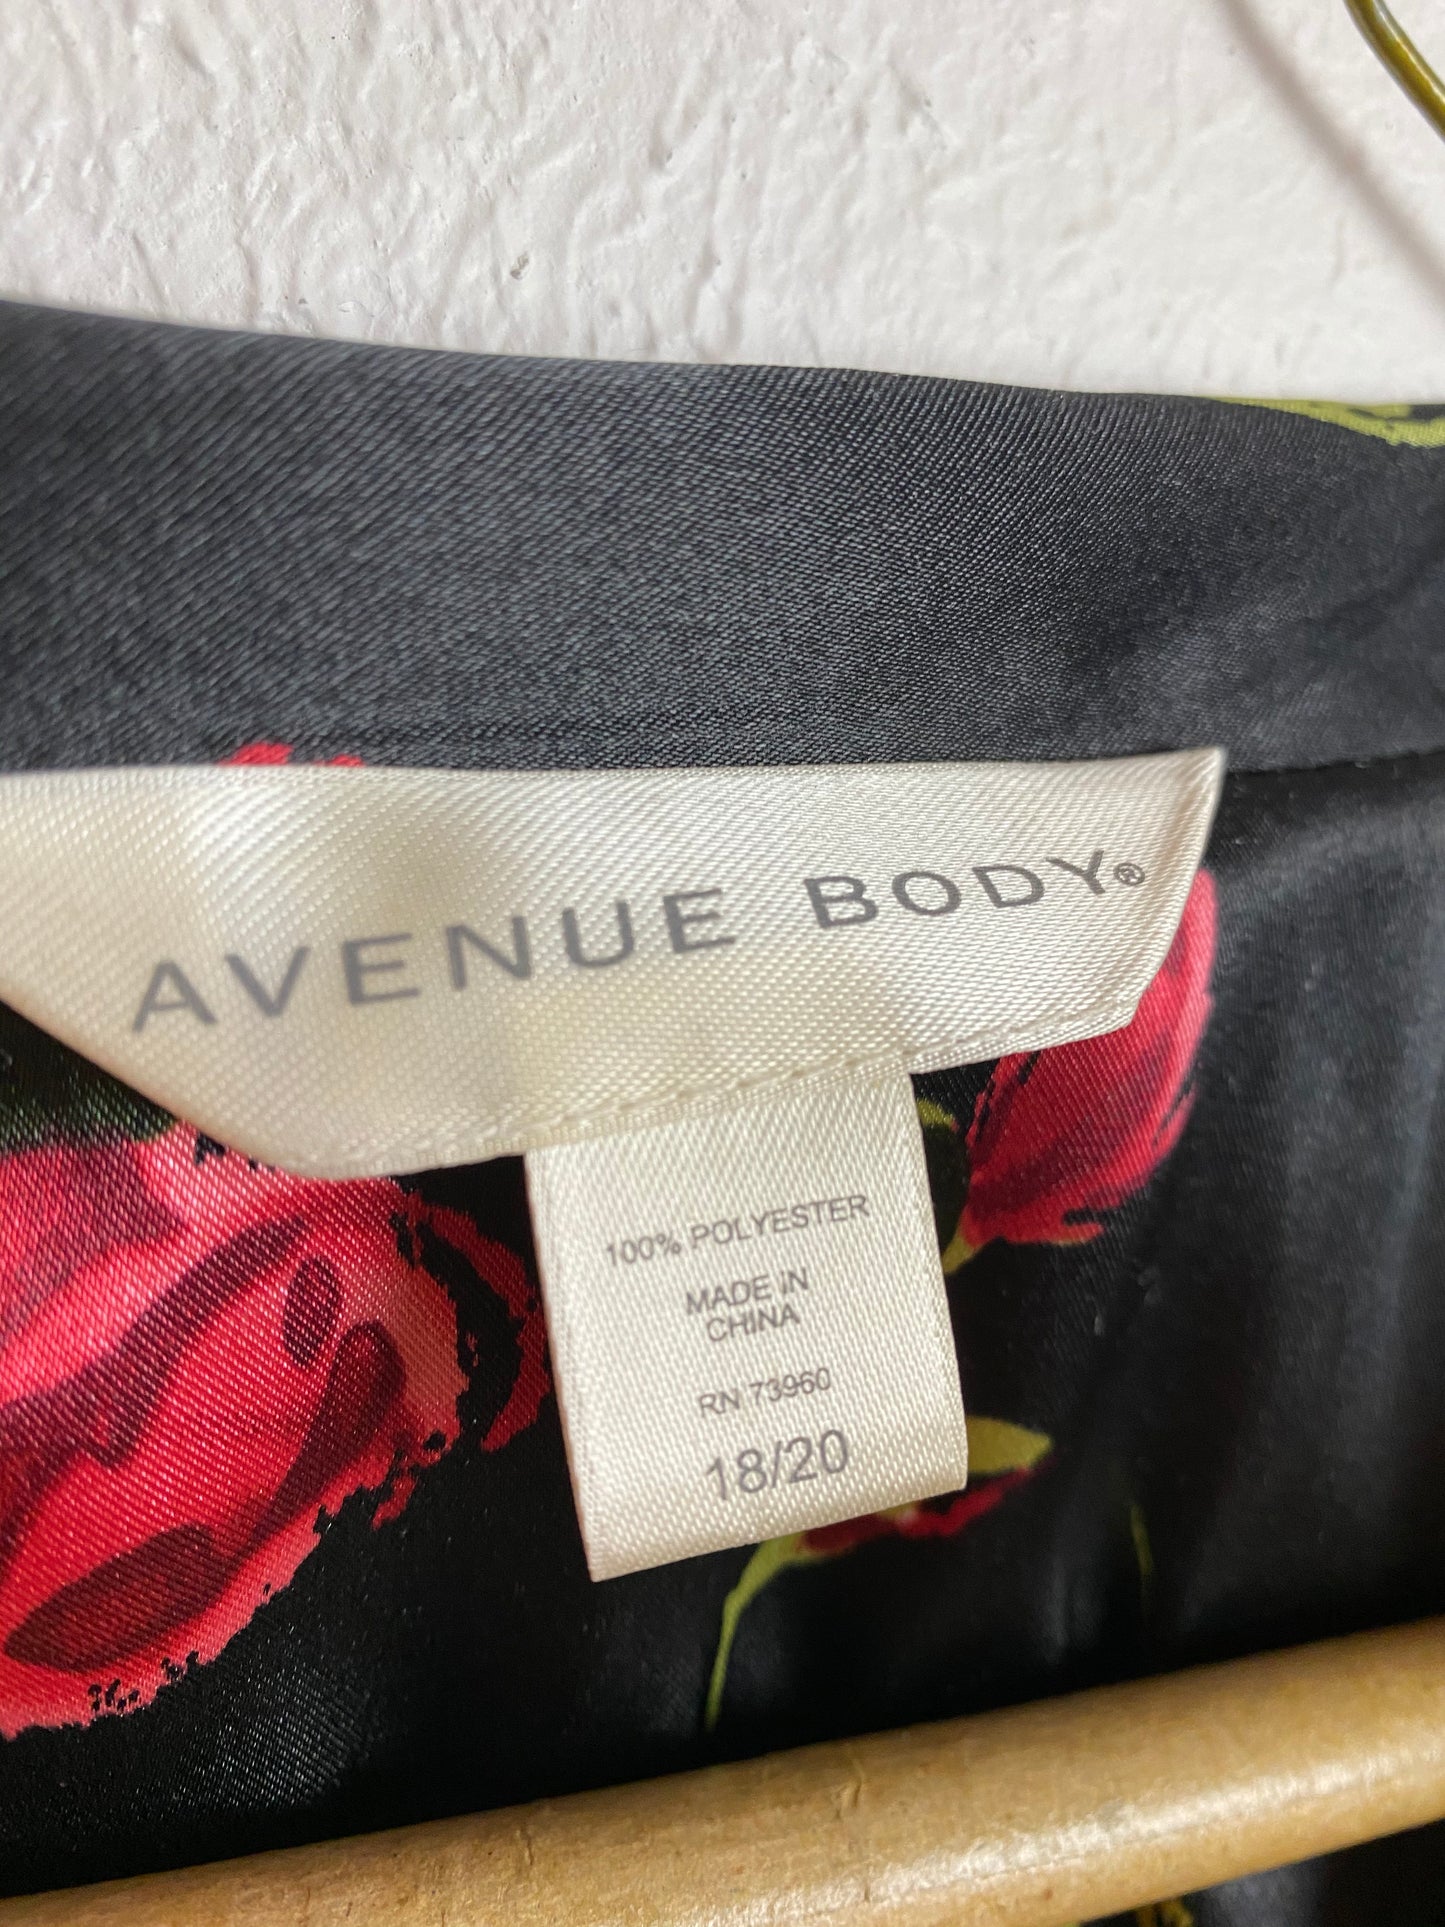 Avenue Body Rose Lounge Robe